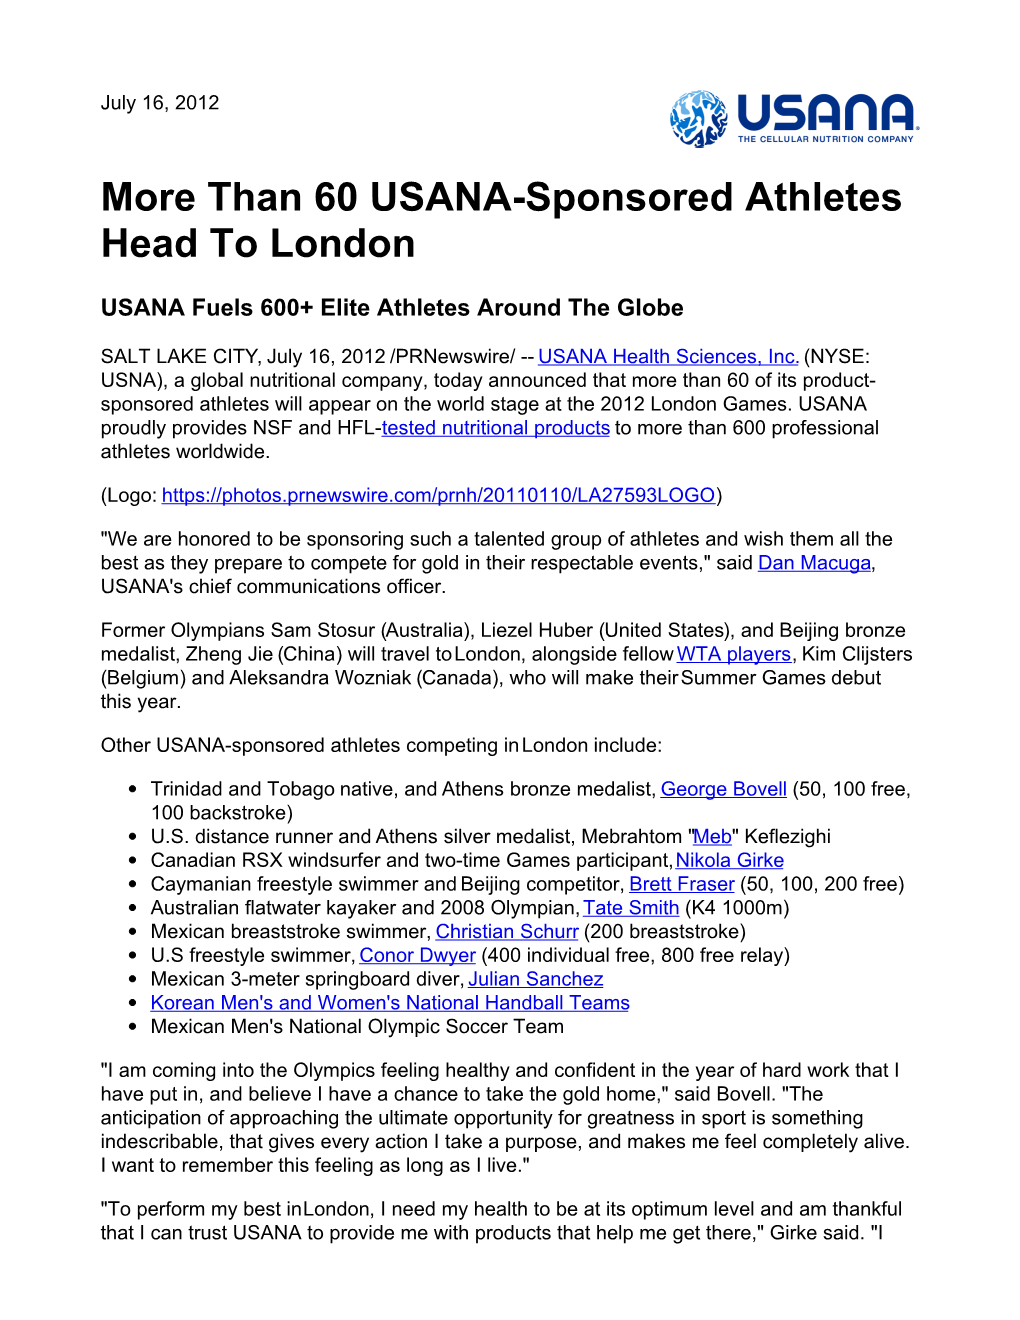 Than 60 USANA-Sponsored Athletes Head to London